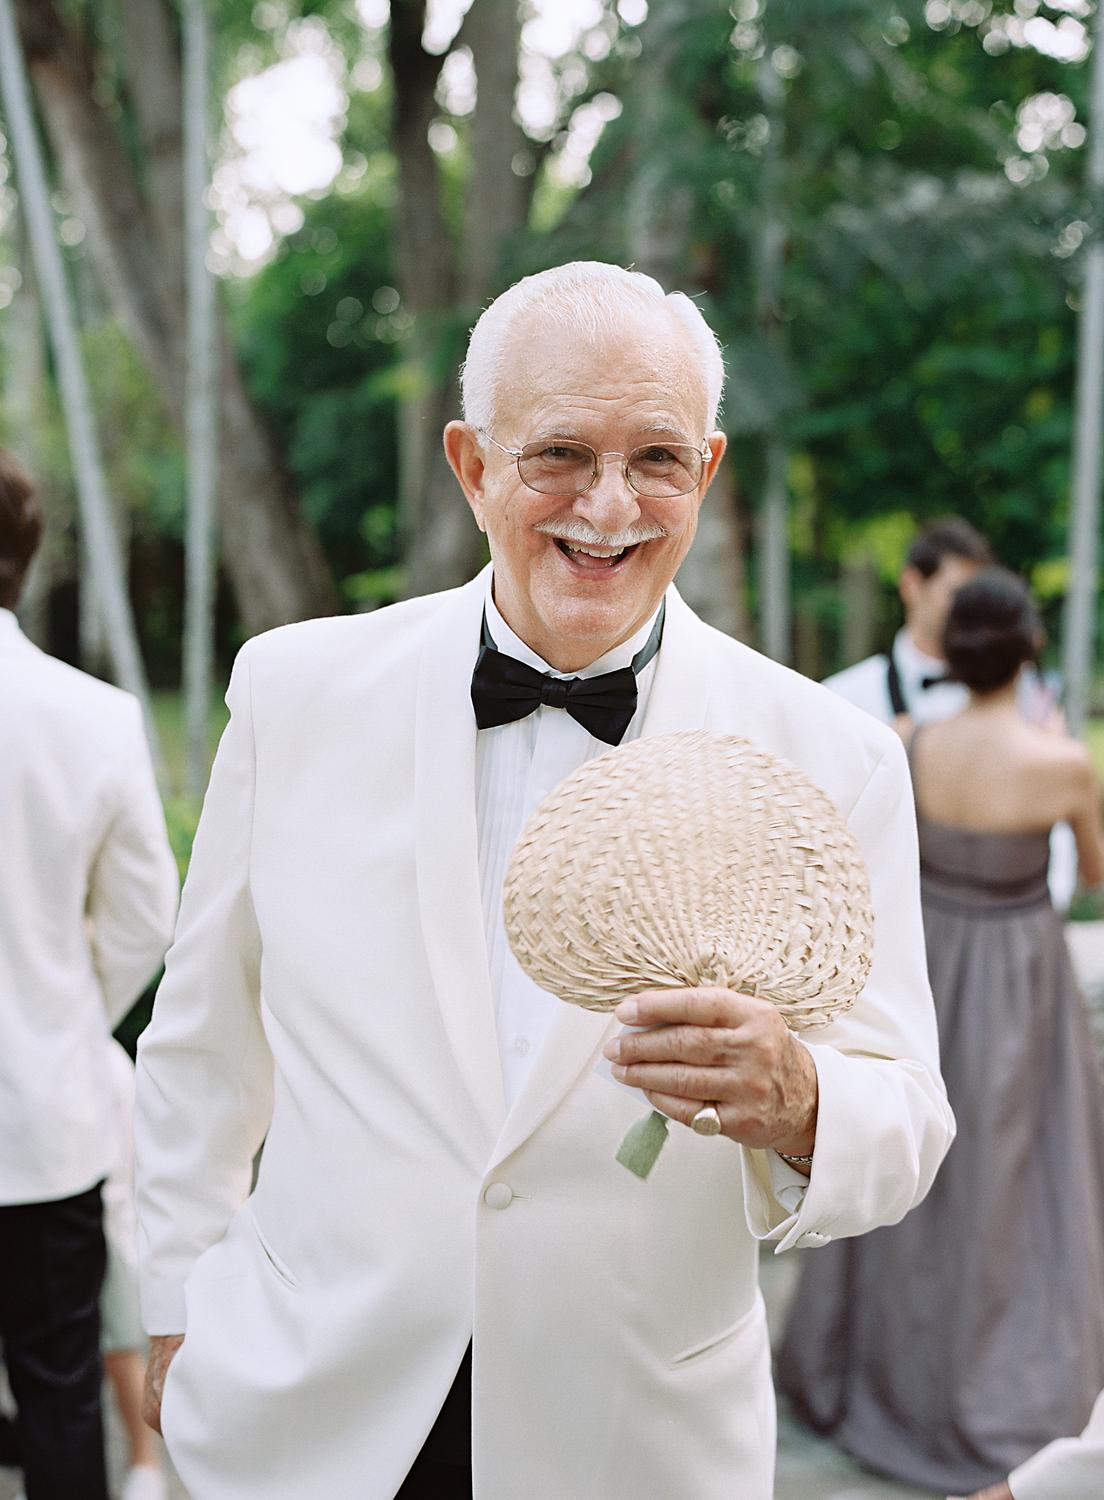 Older gentleman in white dinner jacket fans himself before ceremony at Altos de Chavón.